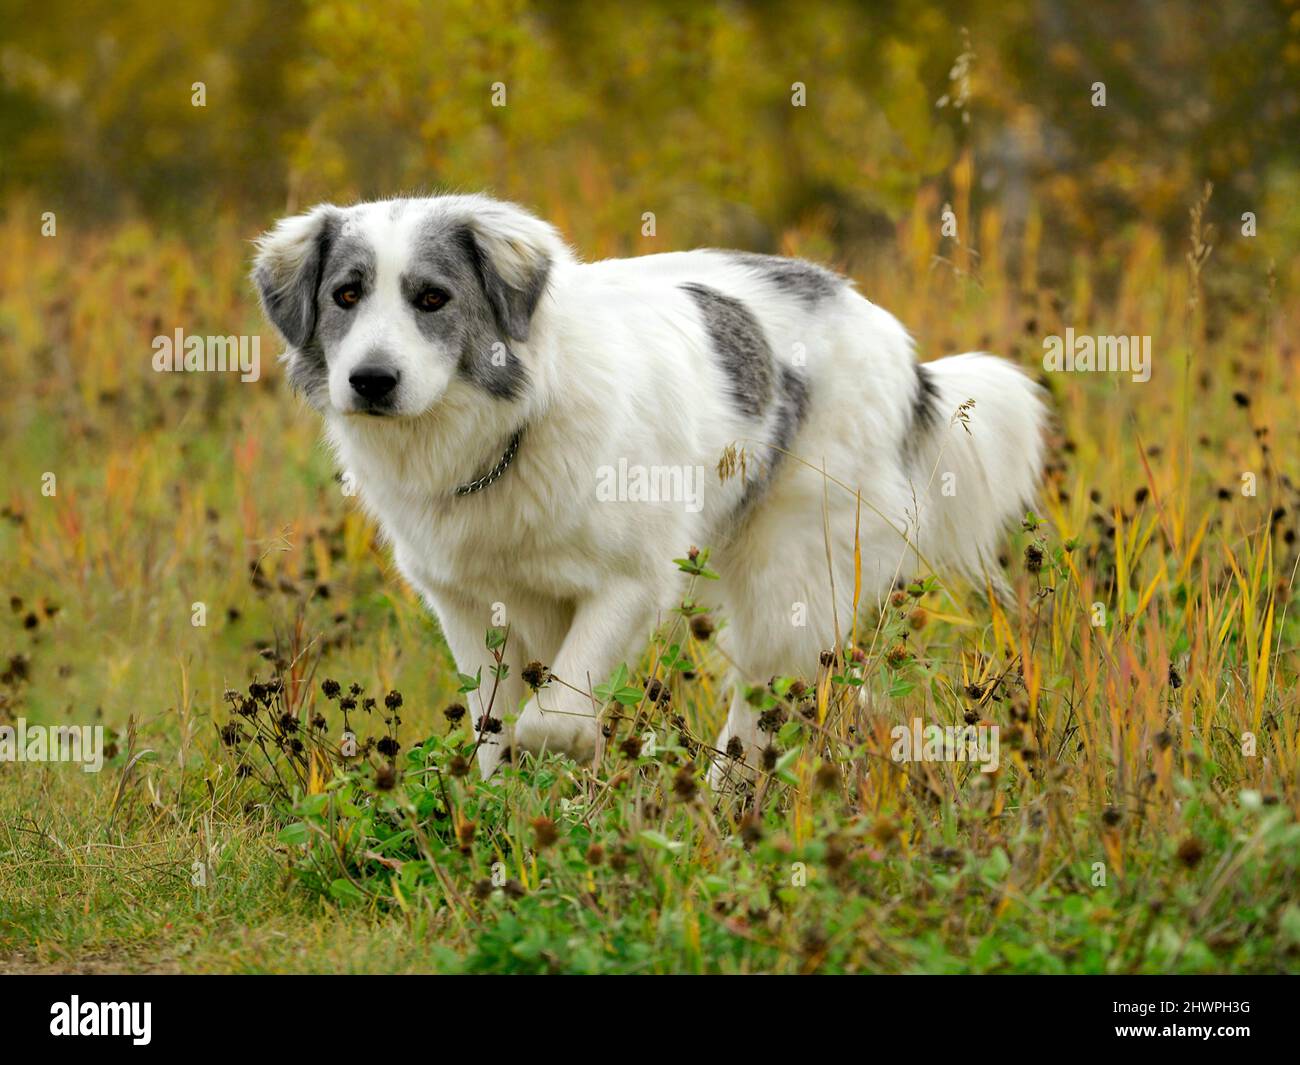 Beautiful Malamute cross Dog walking in high grass, autumn colors. Stock Photo